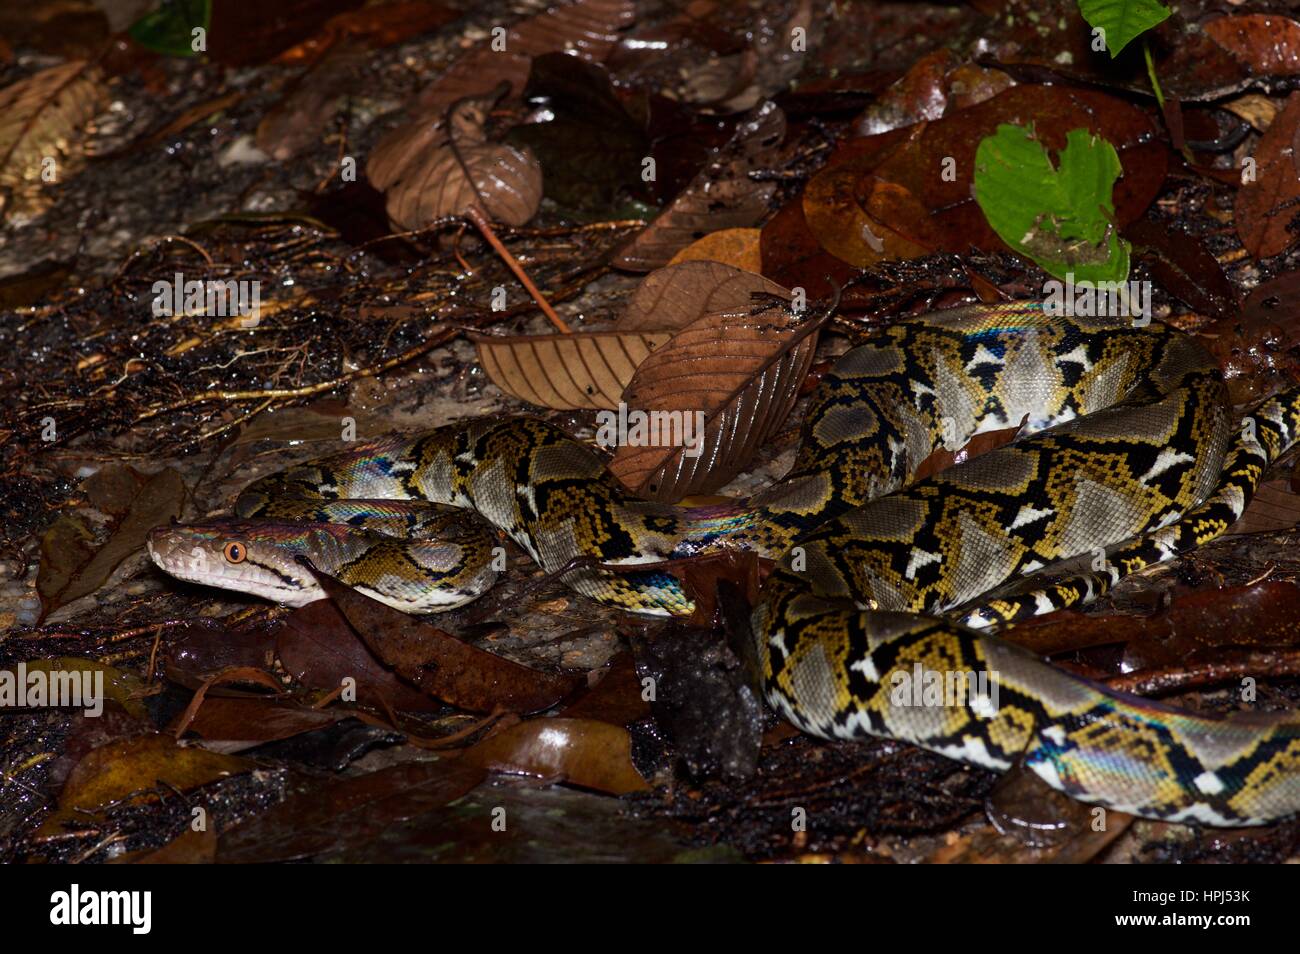 A Reticulated Python (Malayopython reticulatus) partly submerged in a stream in Ulu Yam, Selangor, Malaysia Stock Photo